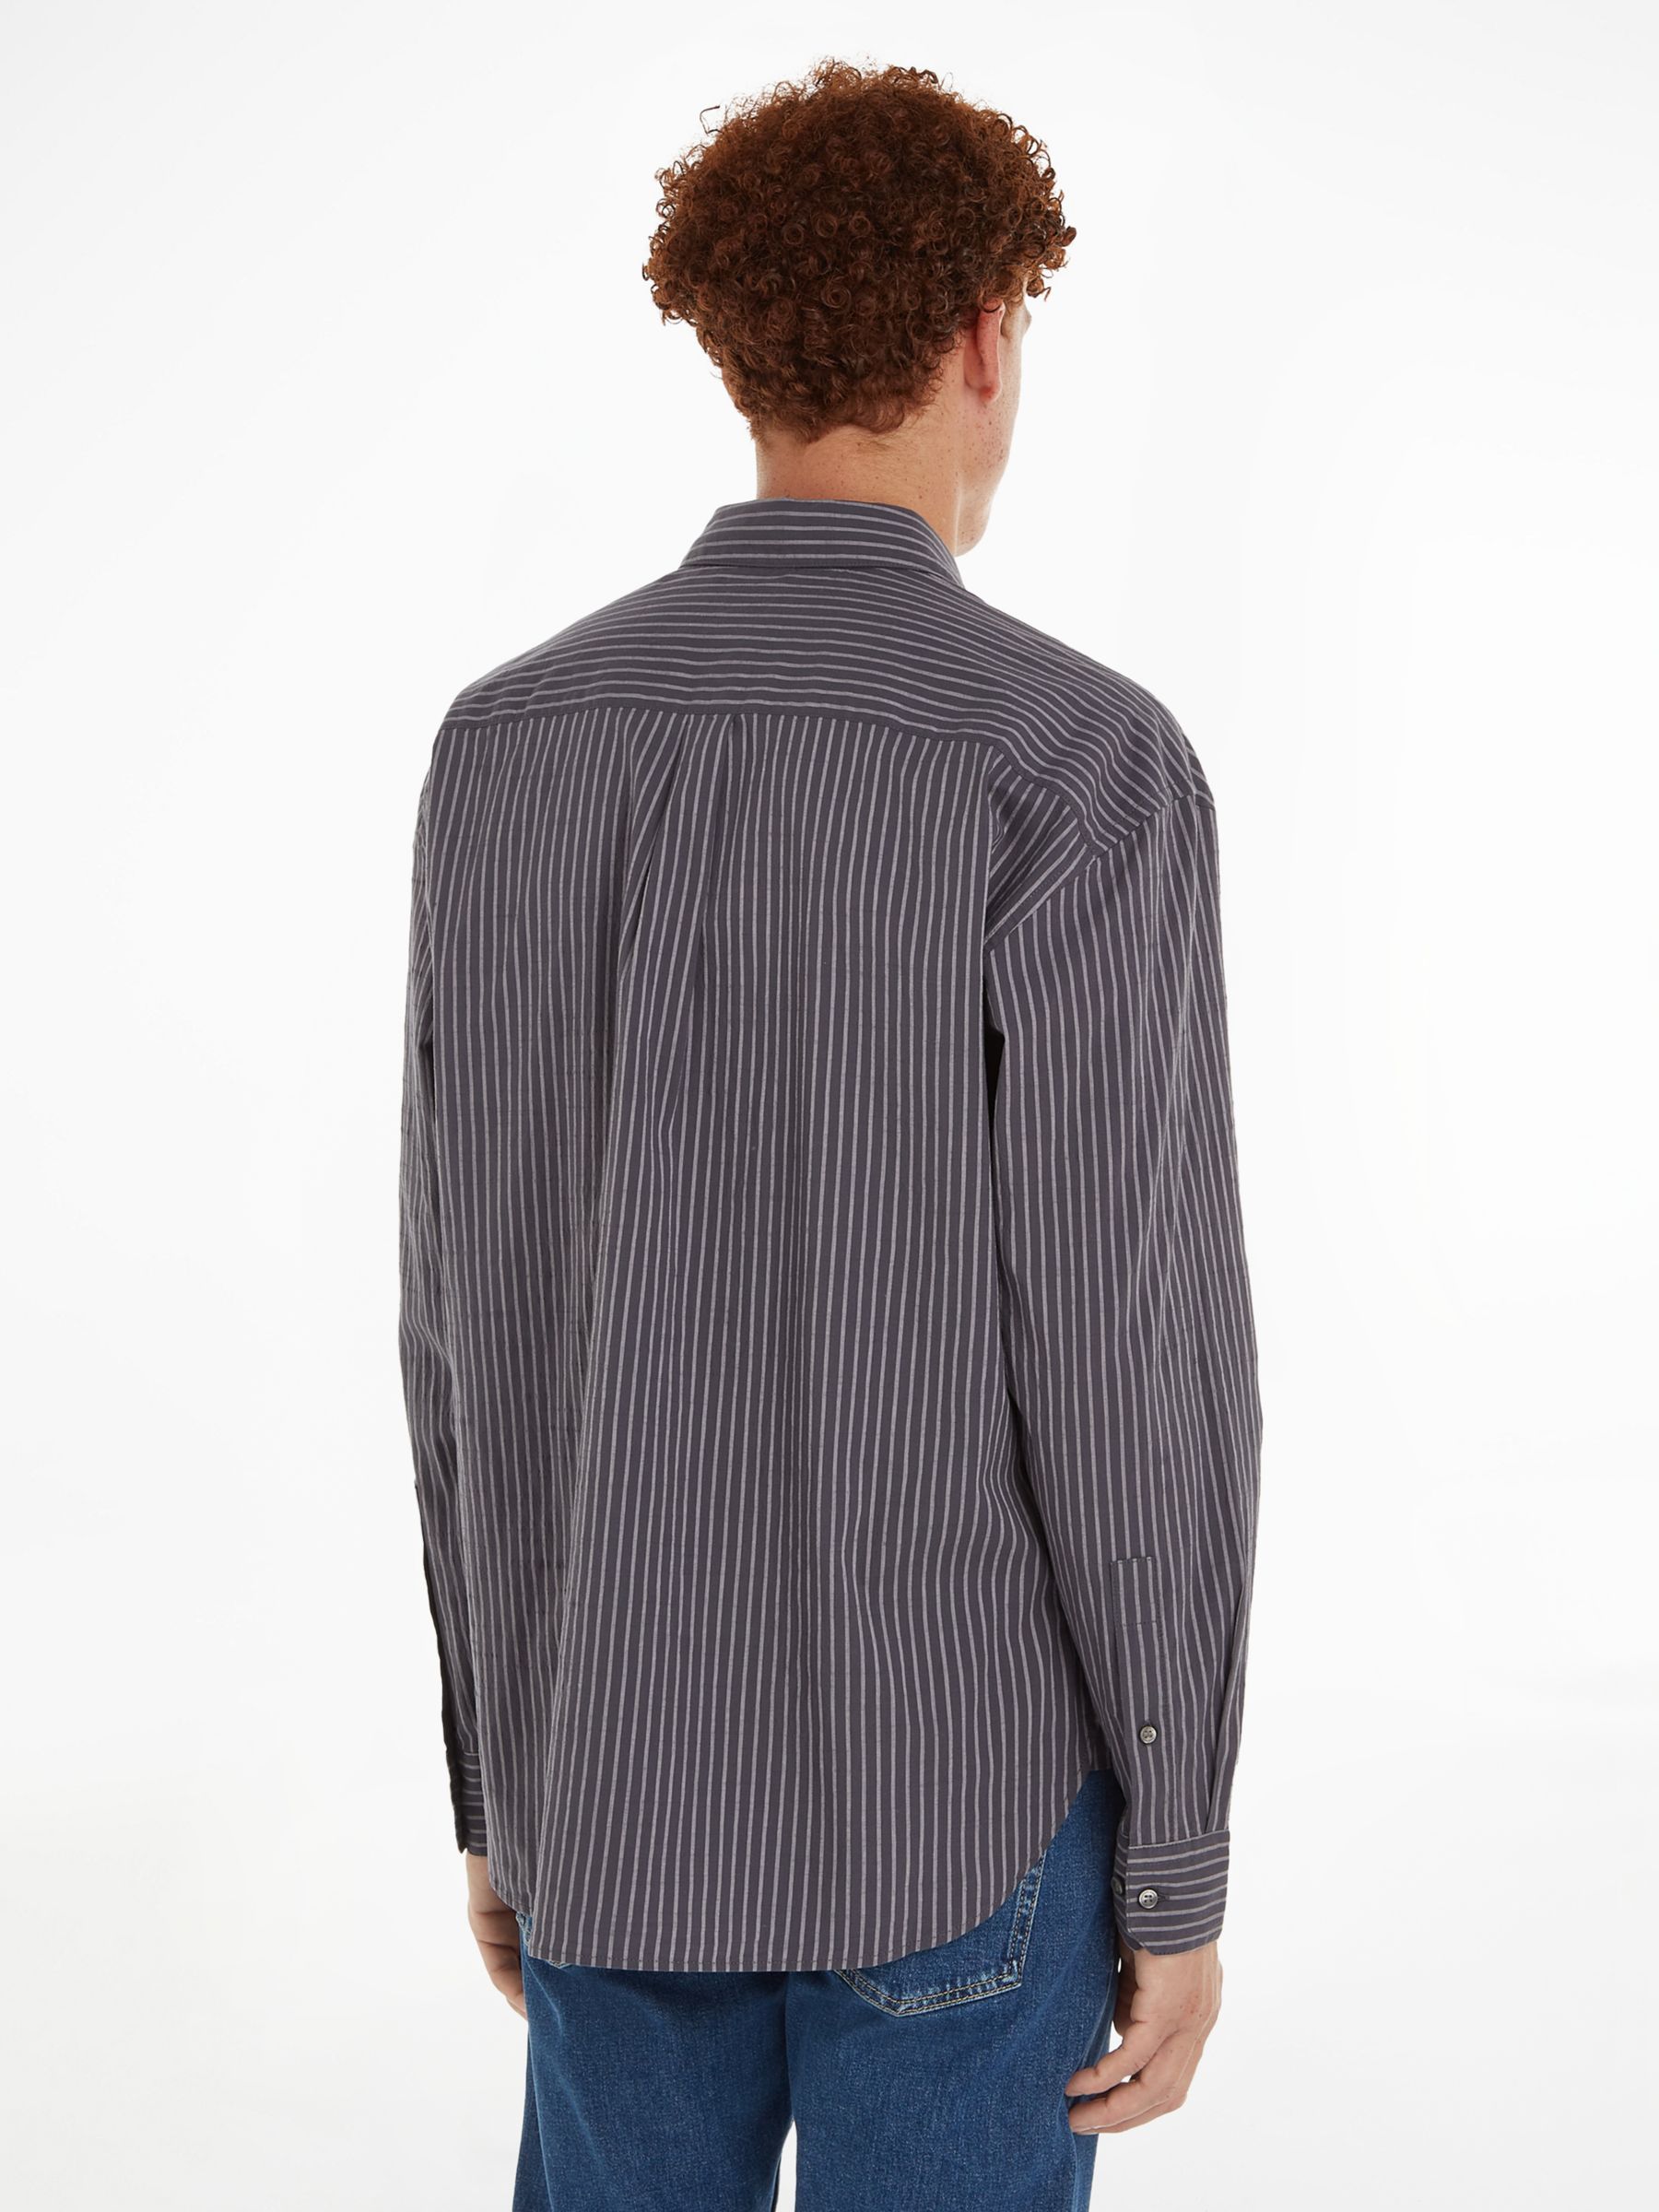 Calvin Klein Stretch Stripe Long Sleeve Shirt, Grey, S